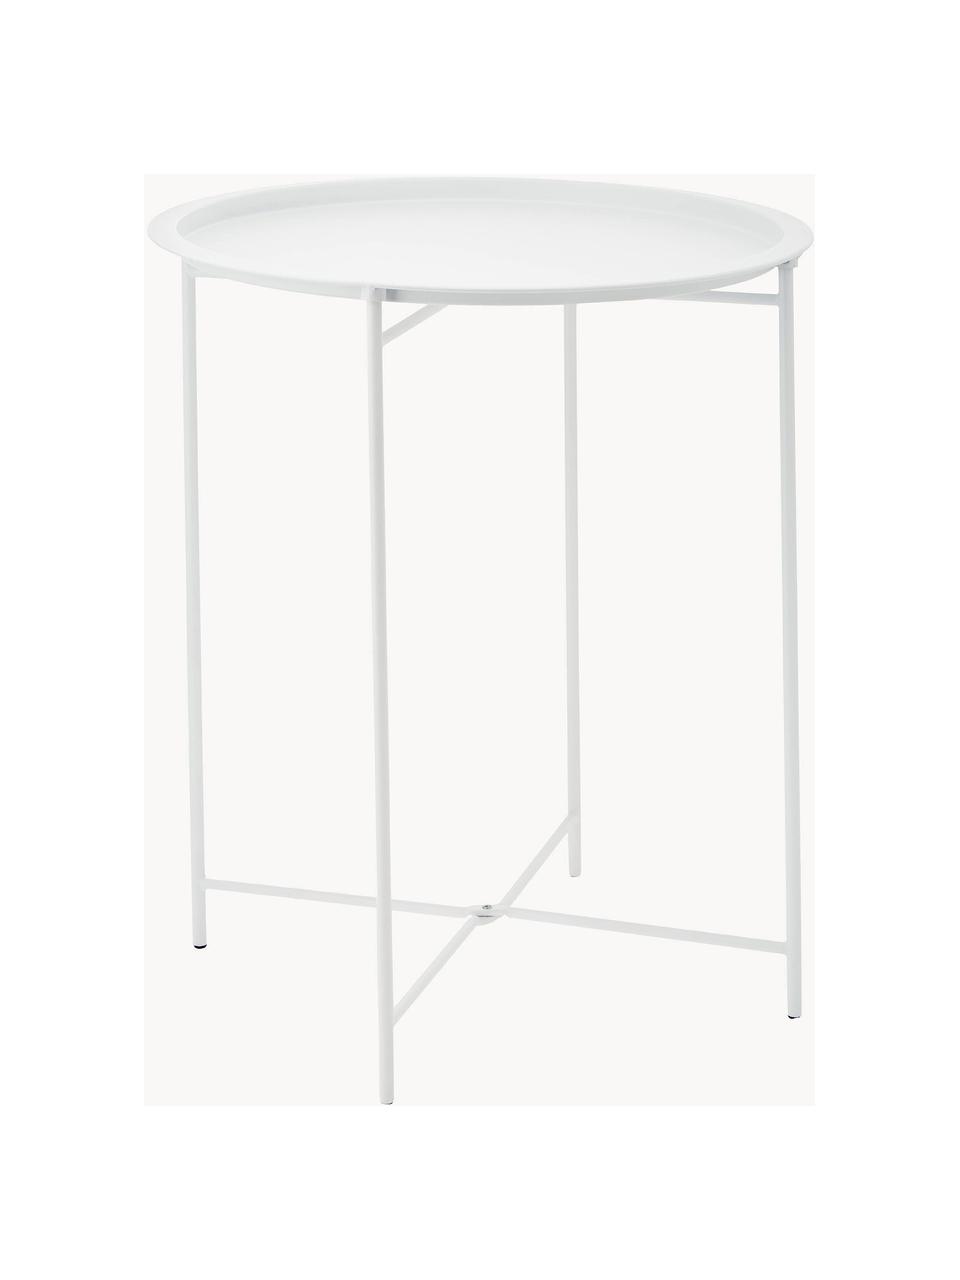 Runder Tablett-Tisch Sangro aus Metall, Metall, pulverbeschichtet, Weiß, Ø 46 x H 52 cm